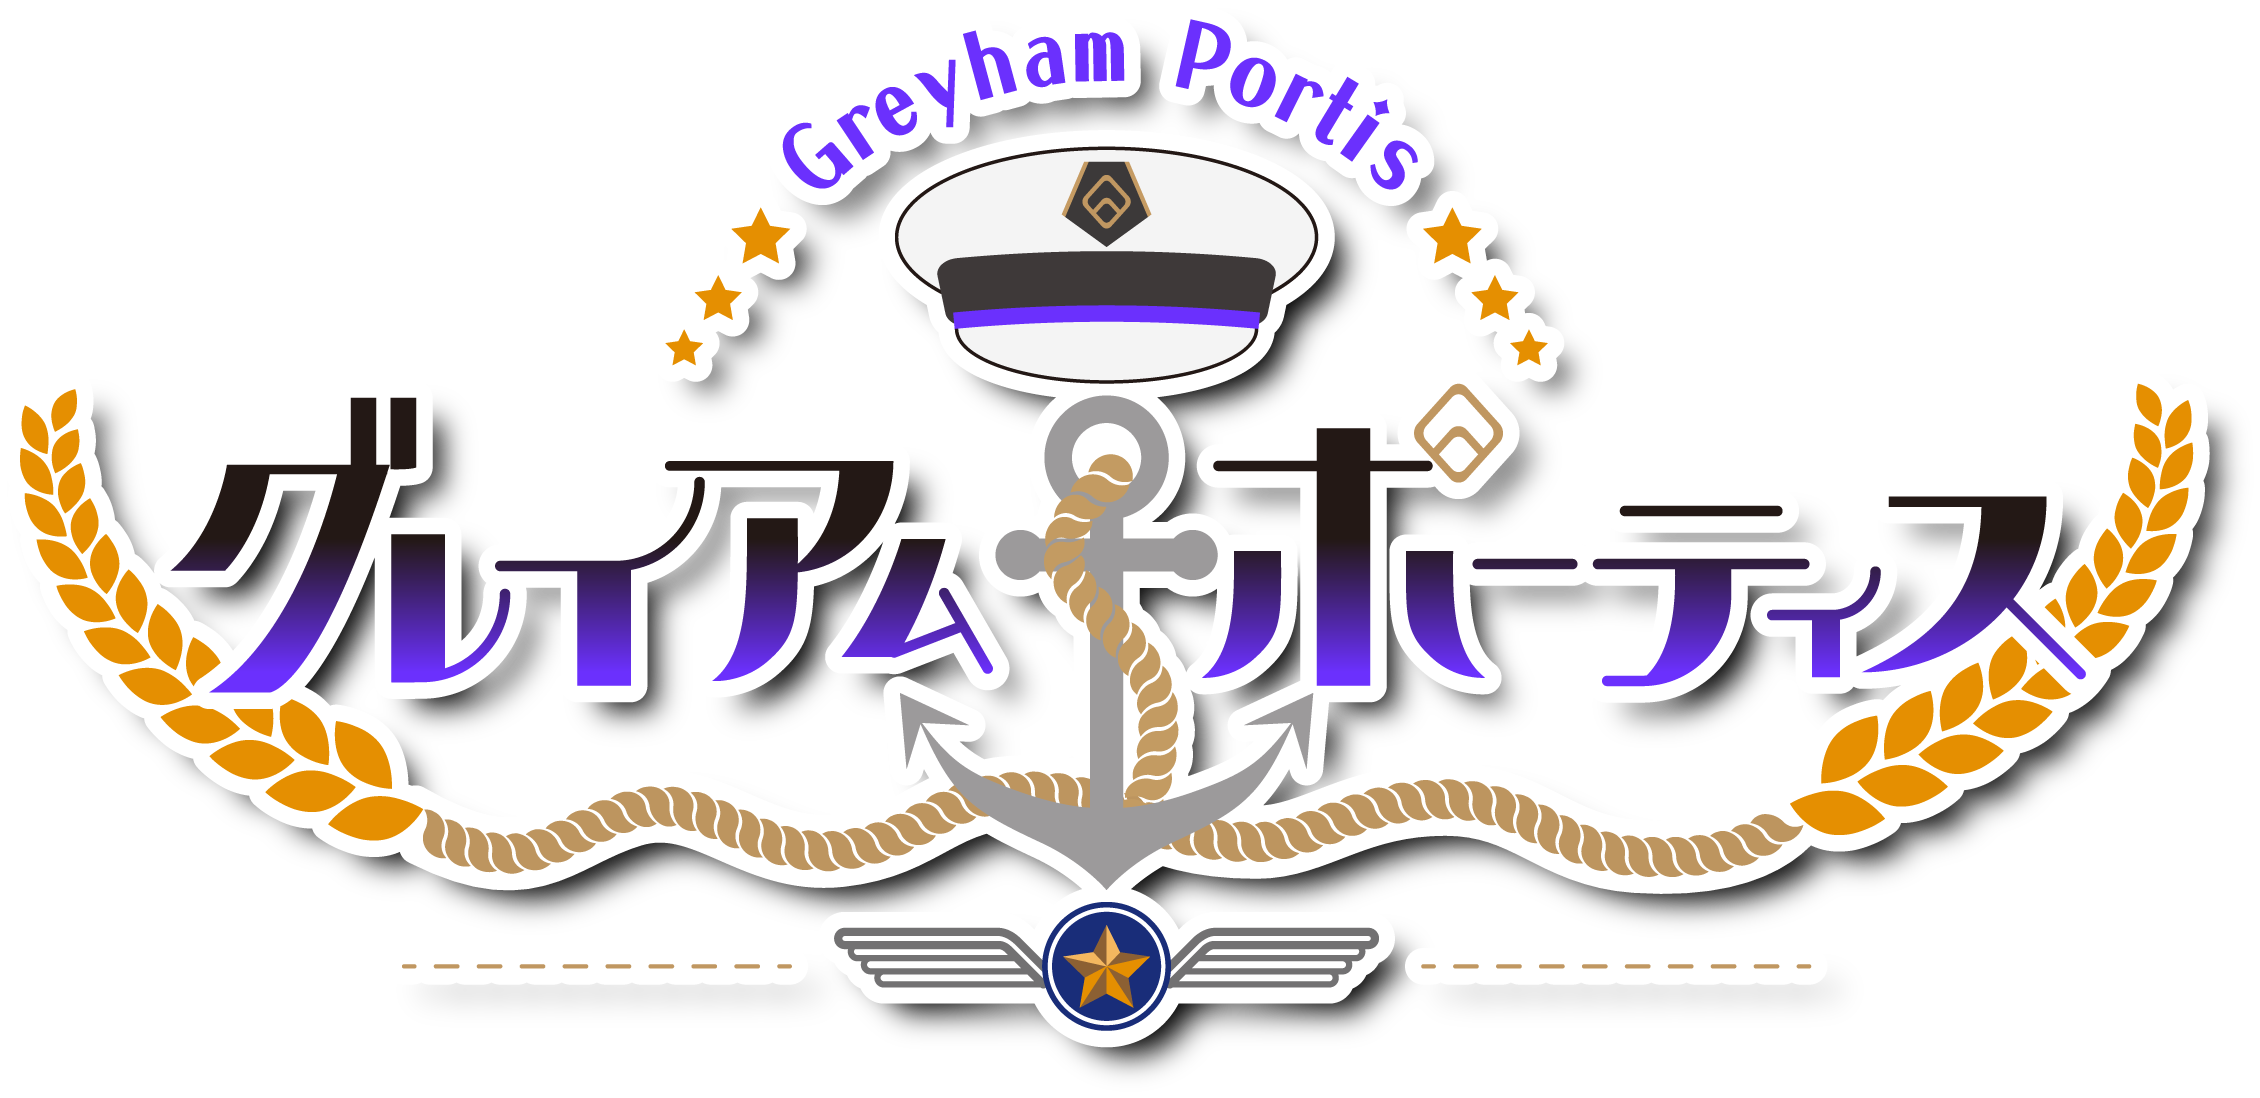 Greyham Portis | Official Site